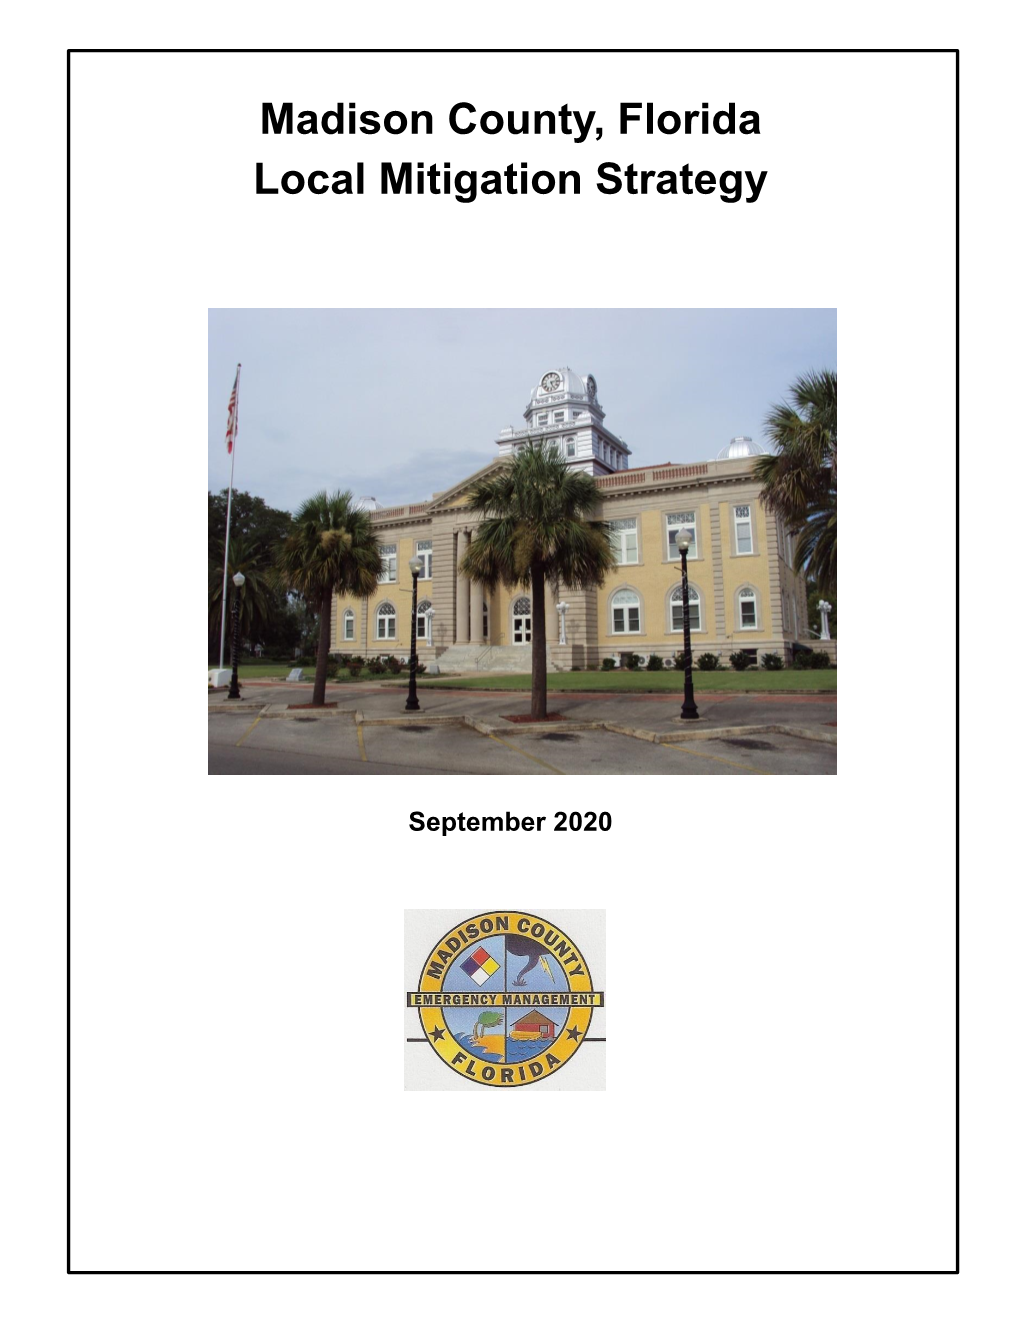 Madison County, Florida Local Mitigation Strategy